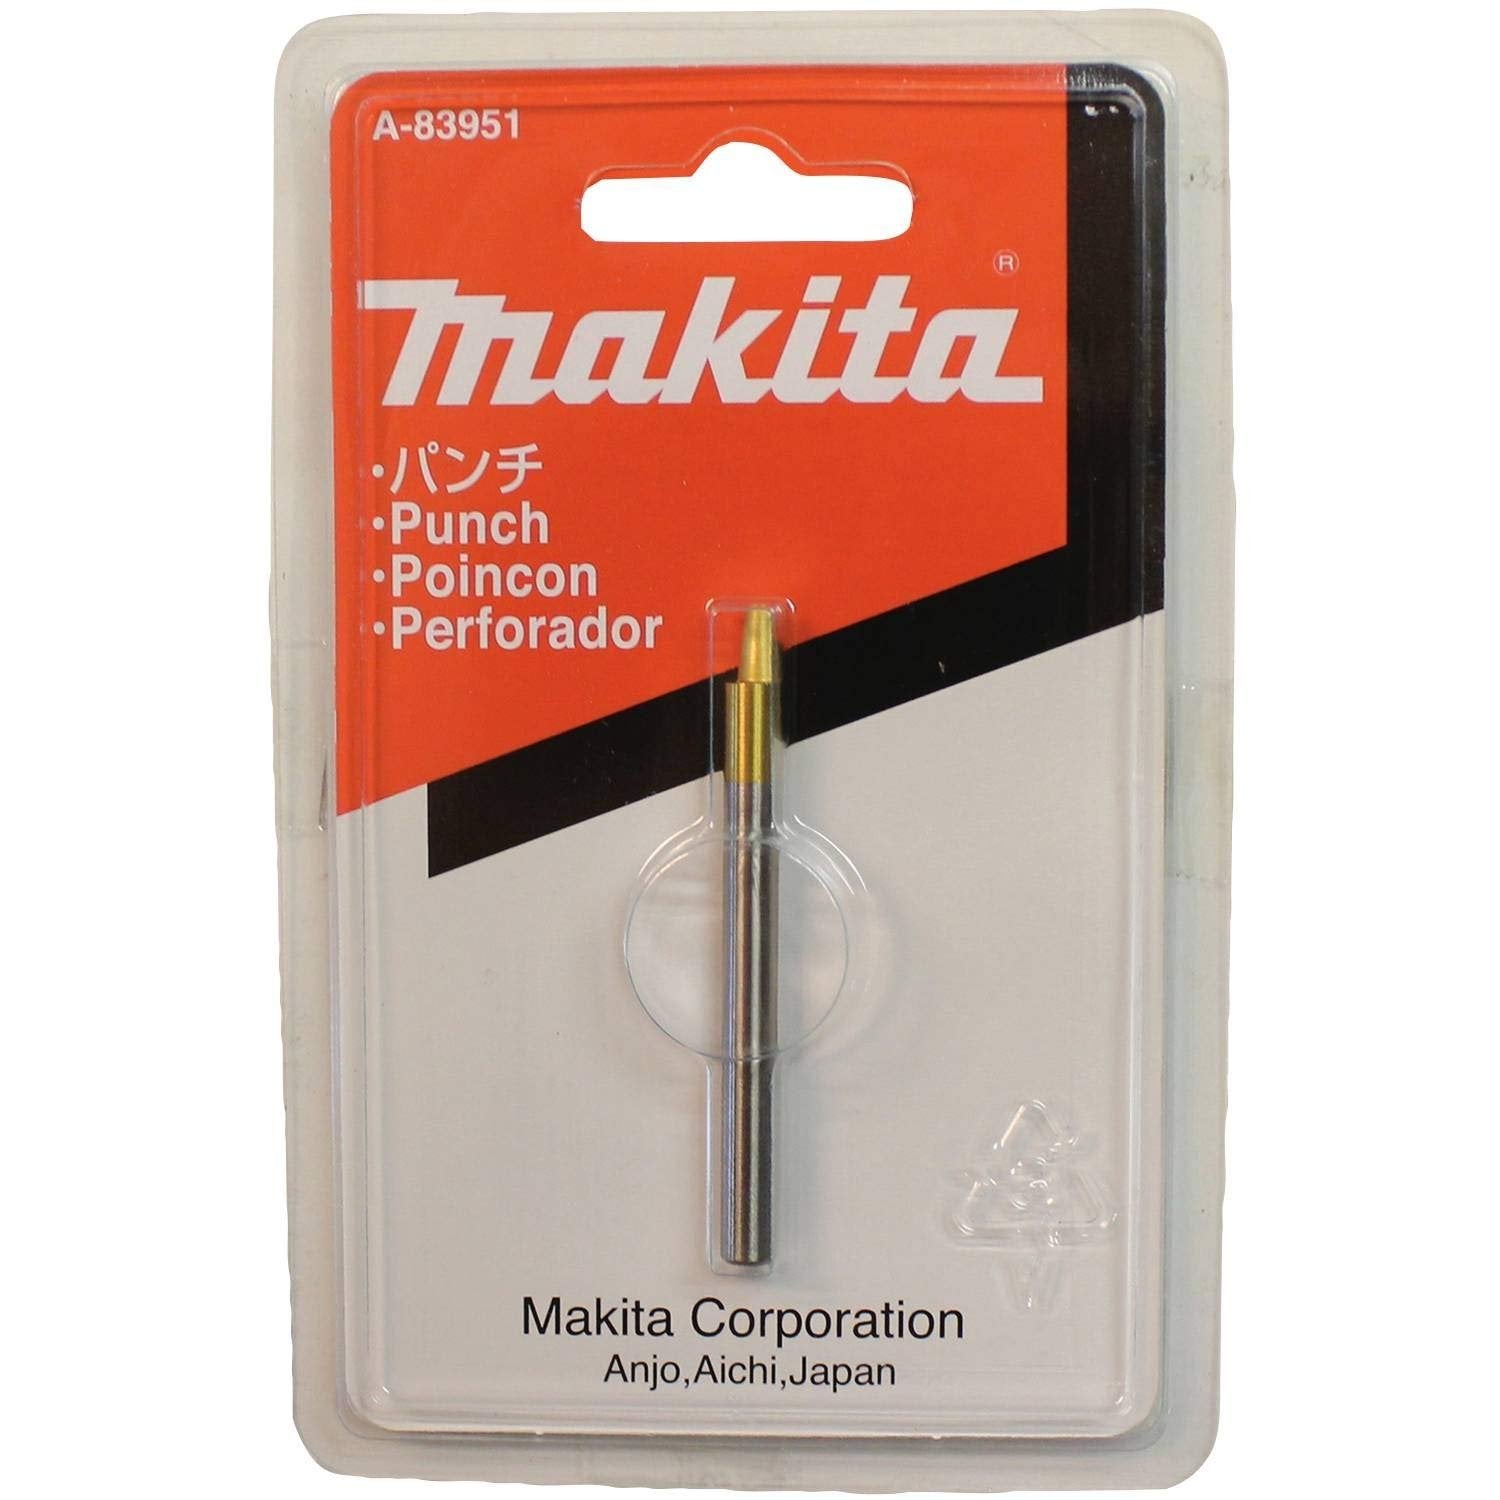 Makita A-83951 - Replacement Punch for JN1601 Nibbler